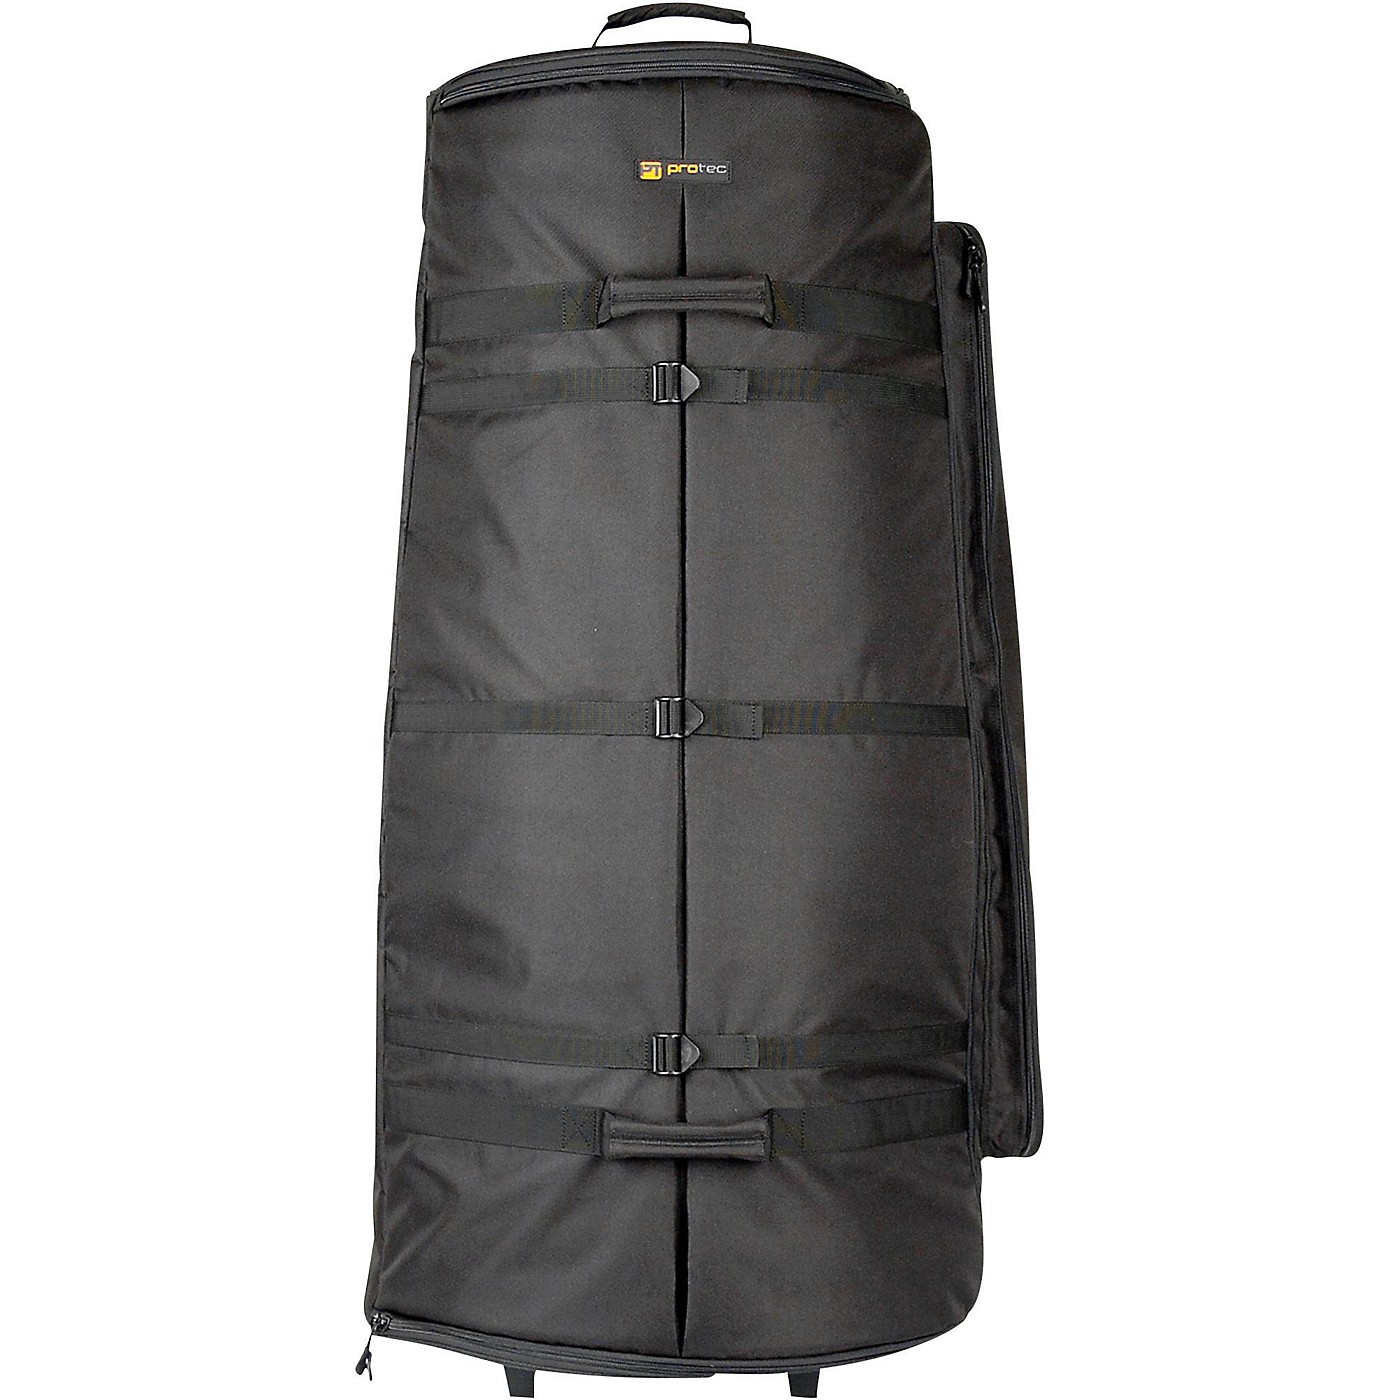 Protec Multi-Tom Bag With Wheels thumbnail